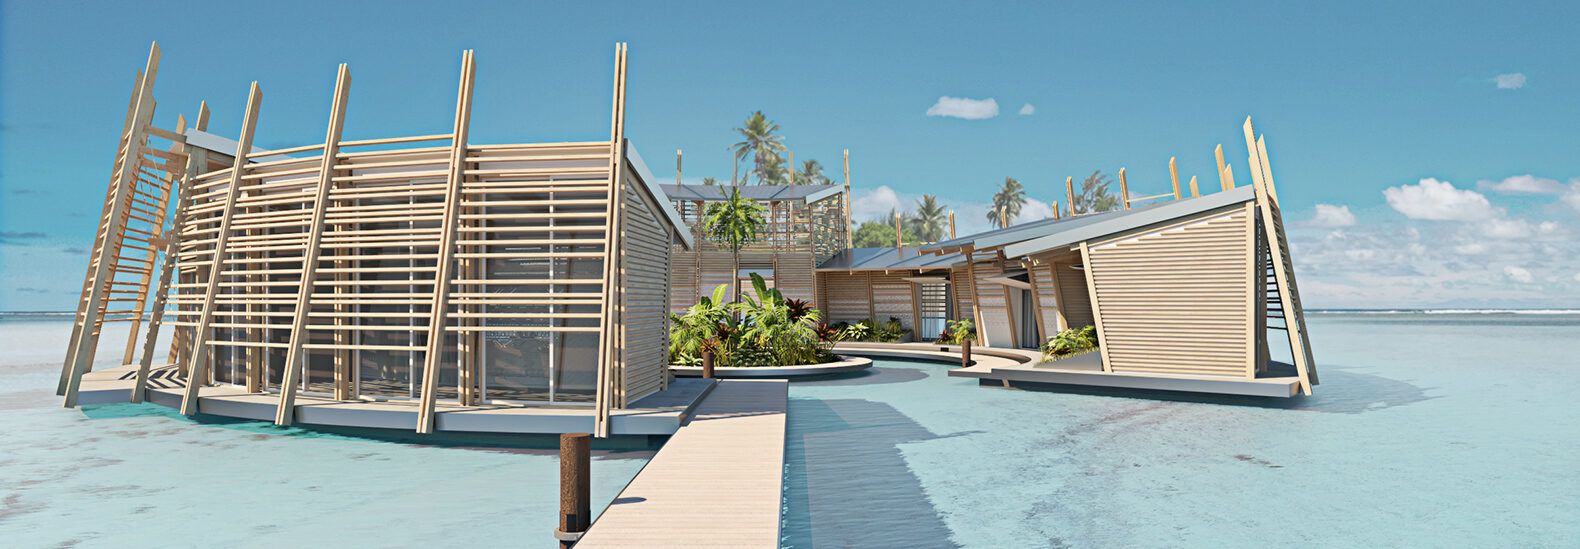 Kiribati Floating Houses address rising waters and land limitations